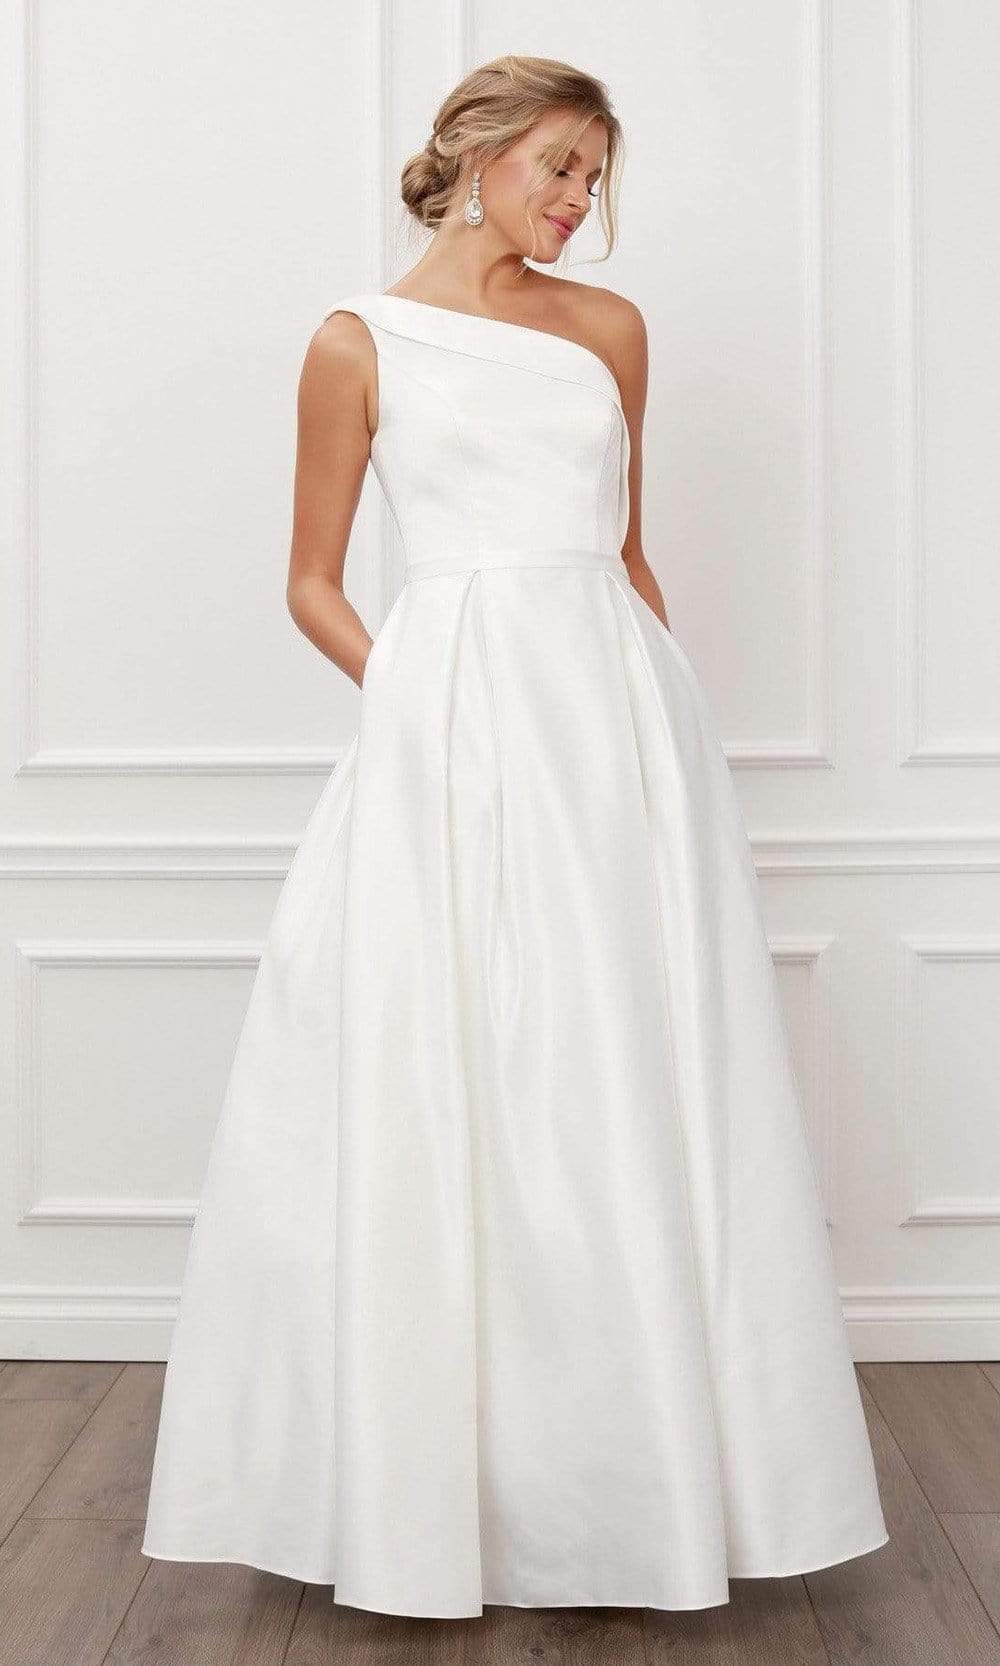 Nox Anabel - E469 One Shoulder A-Line Evening Dress
